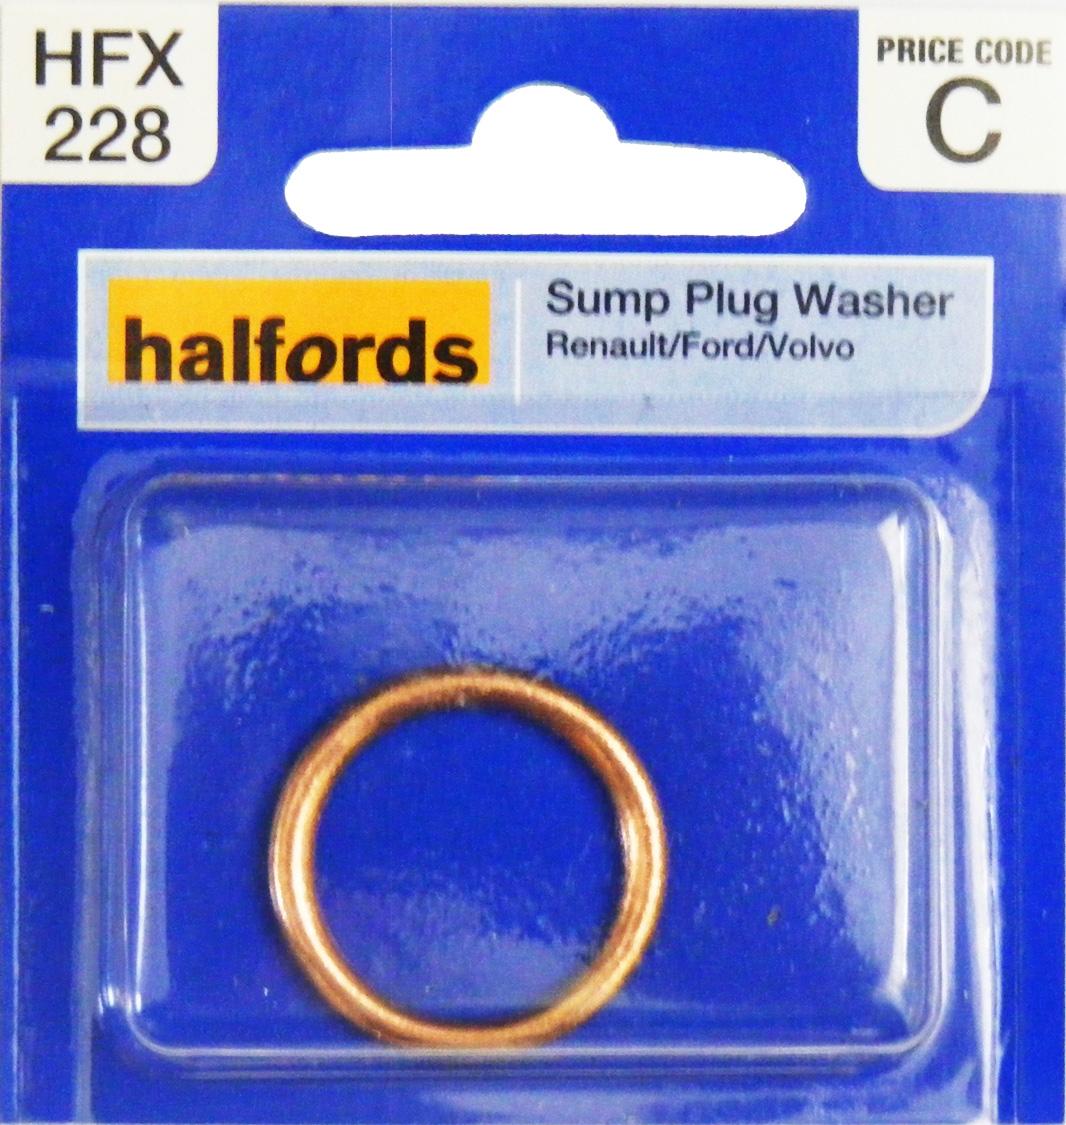 Halfords Sump Plug Washer (Renault/Ford/Volvo)  Hfx228